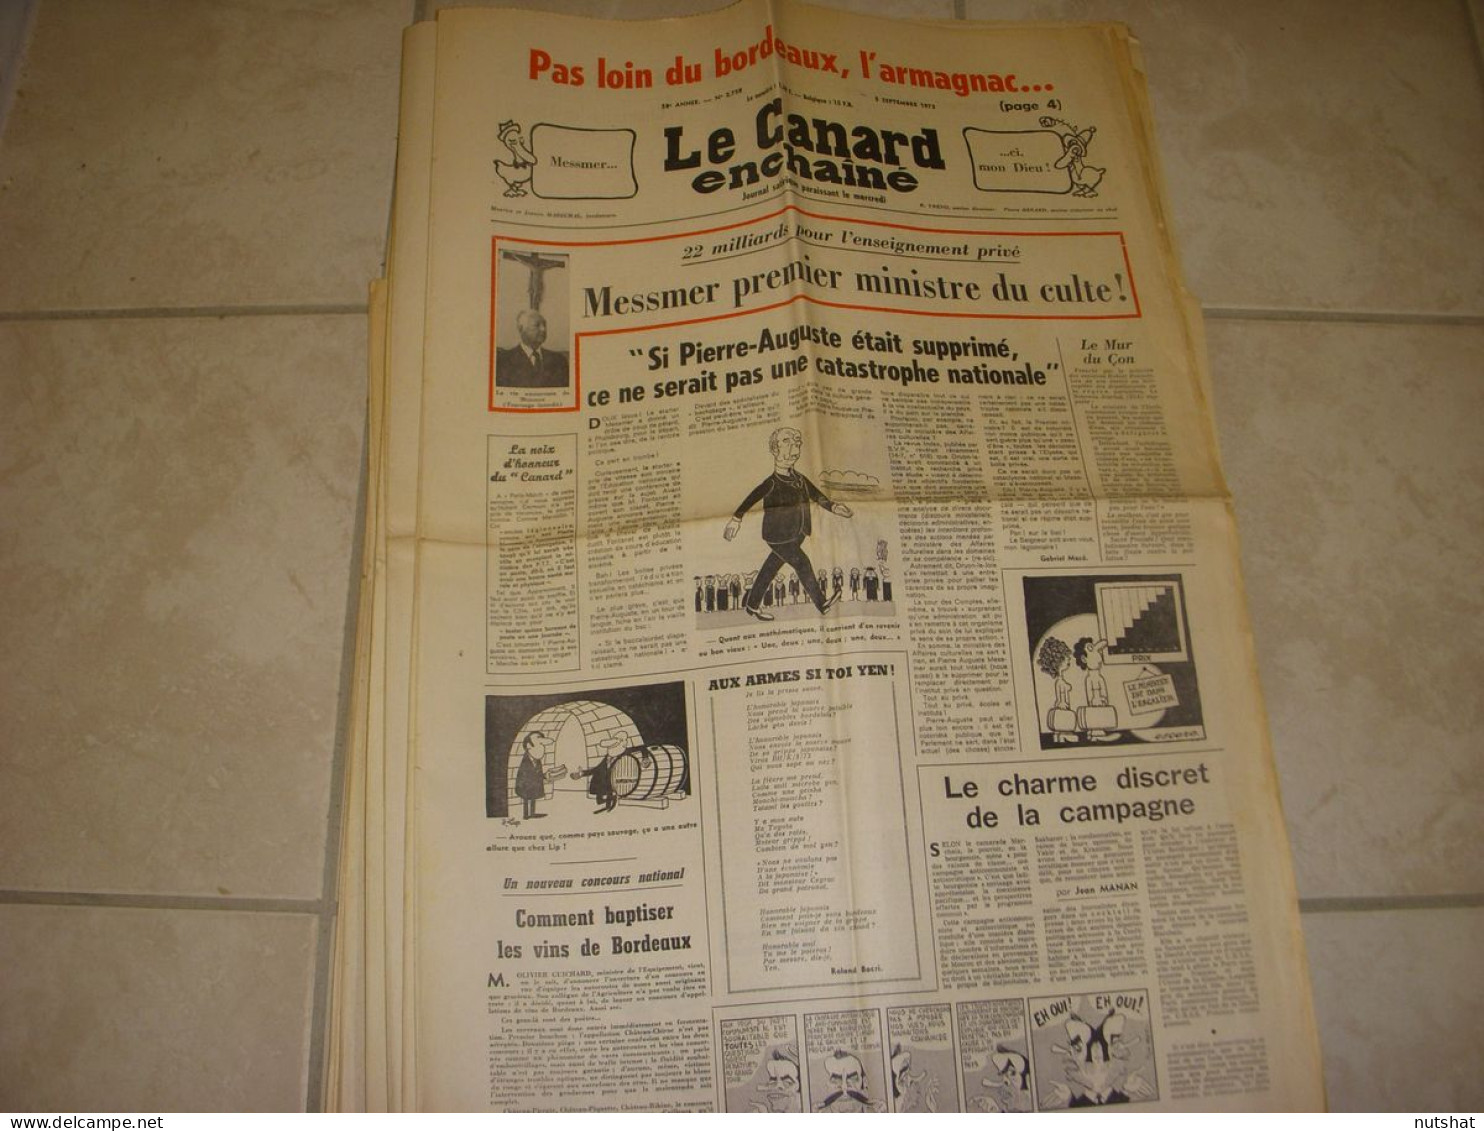 CANARD ENCHAINE 2758 05.09.1973 Le MLF Michel POLAC Benigno CACERES Guy LUX - Politics